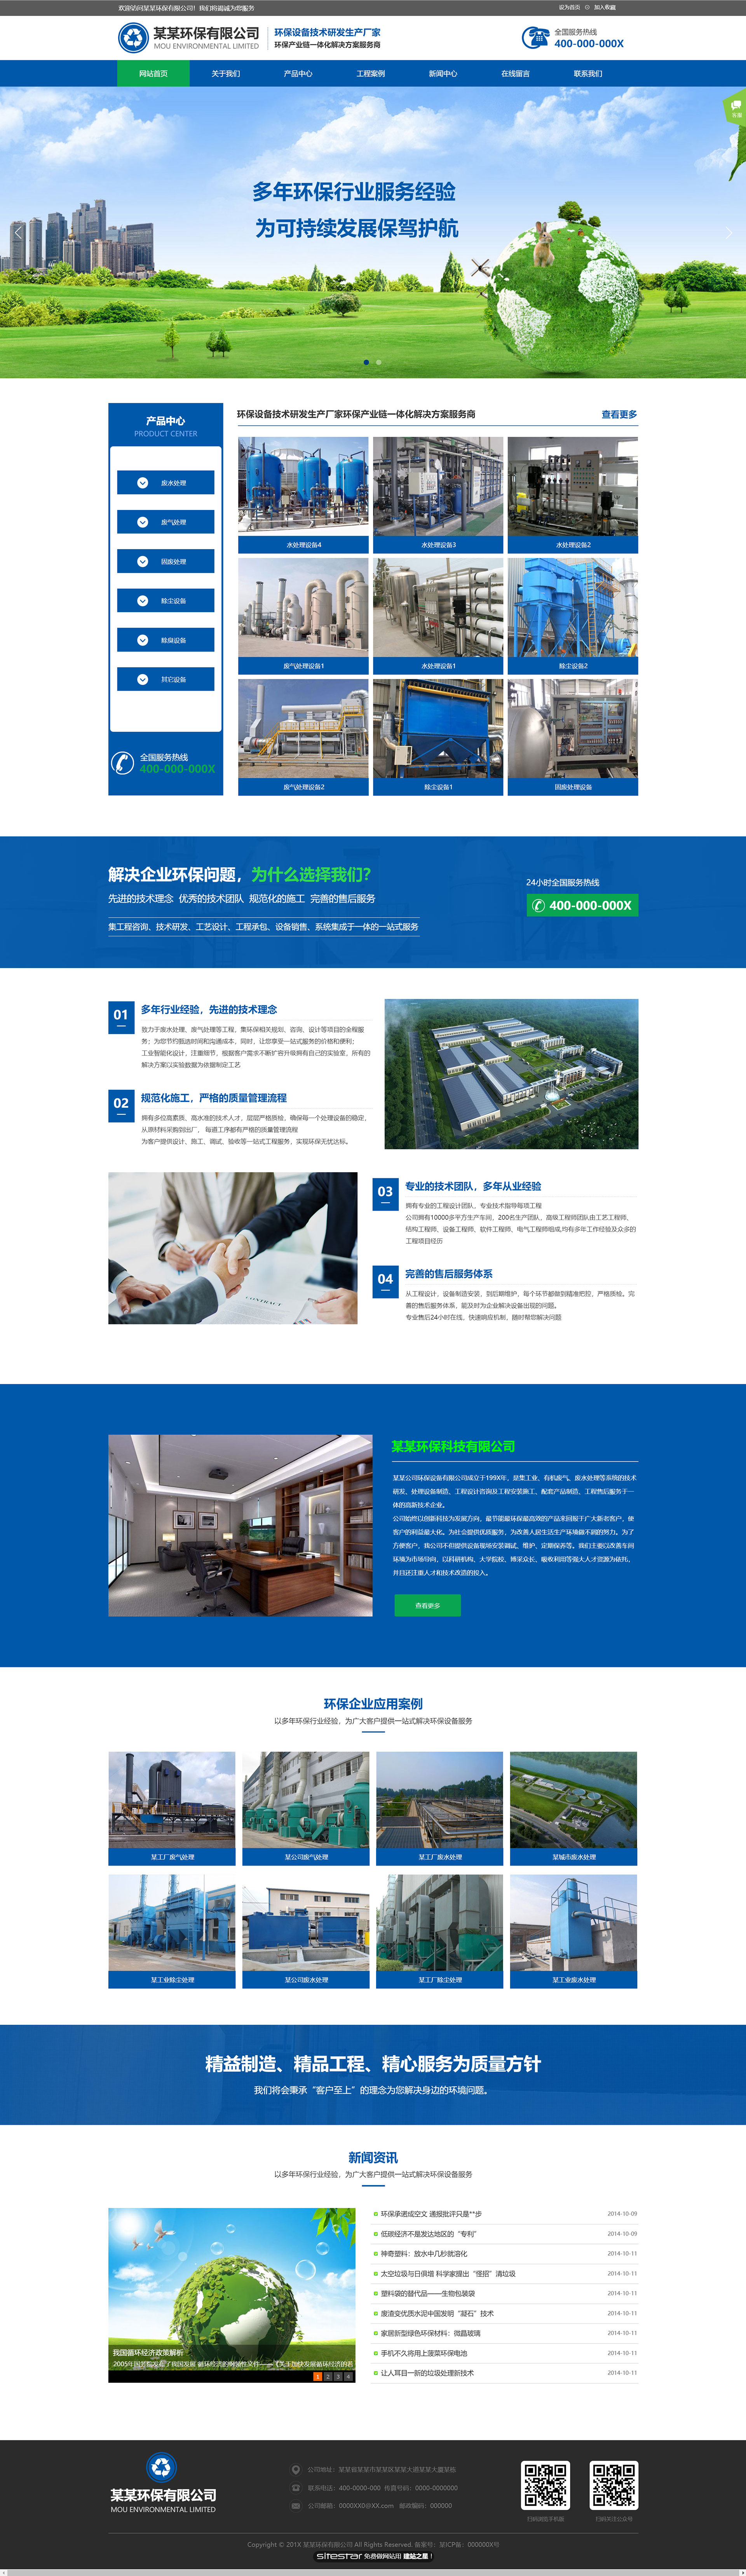 环保网站模板-environment-288